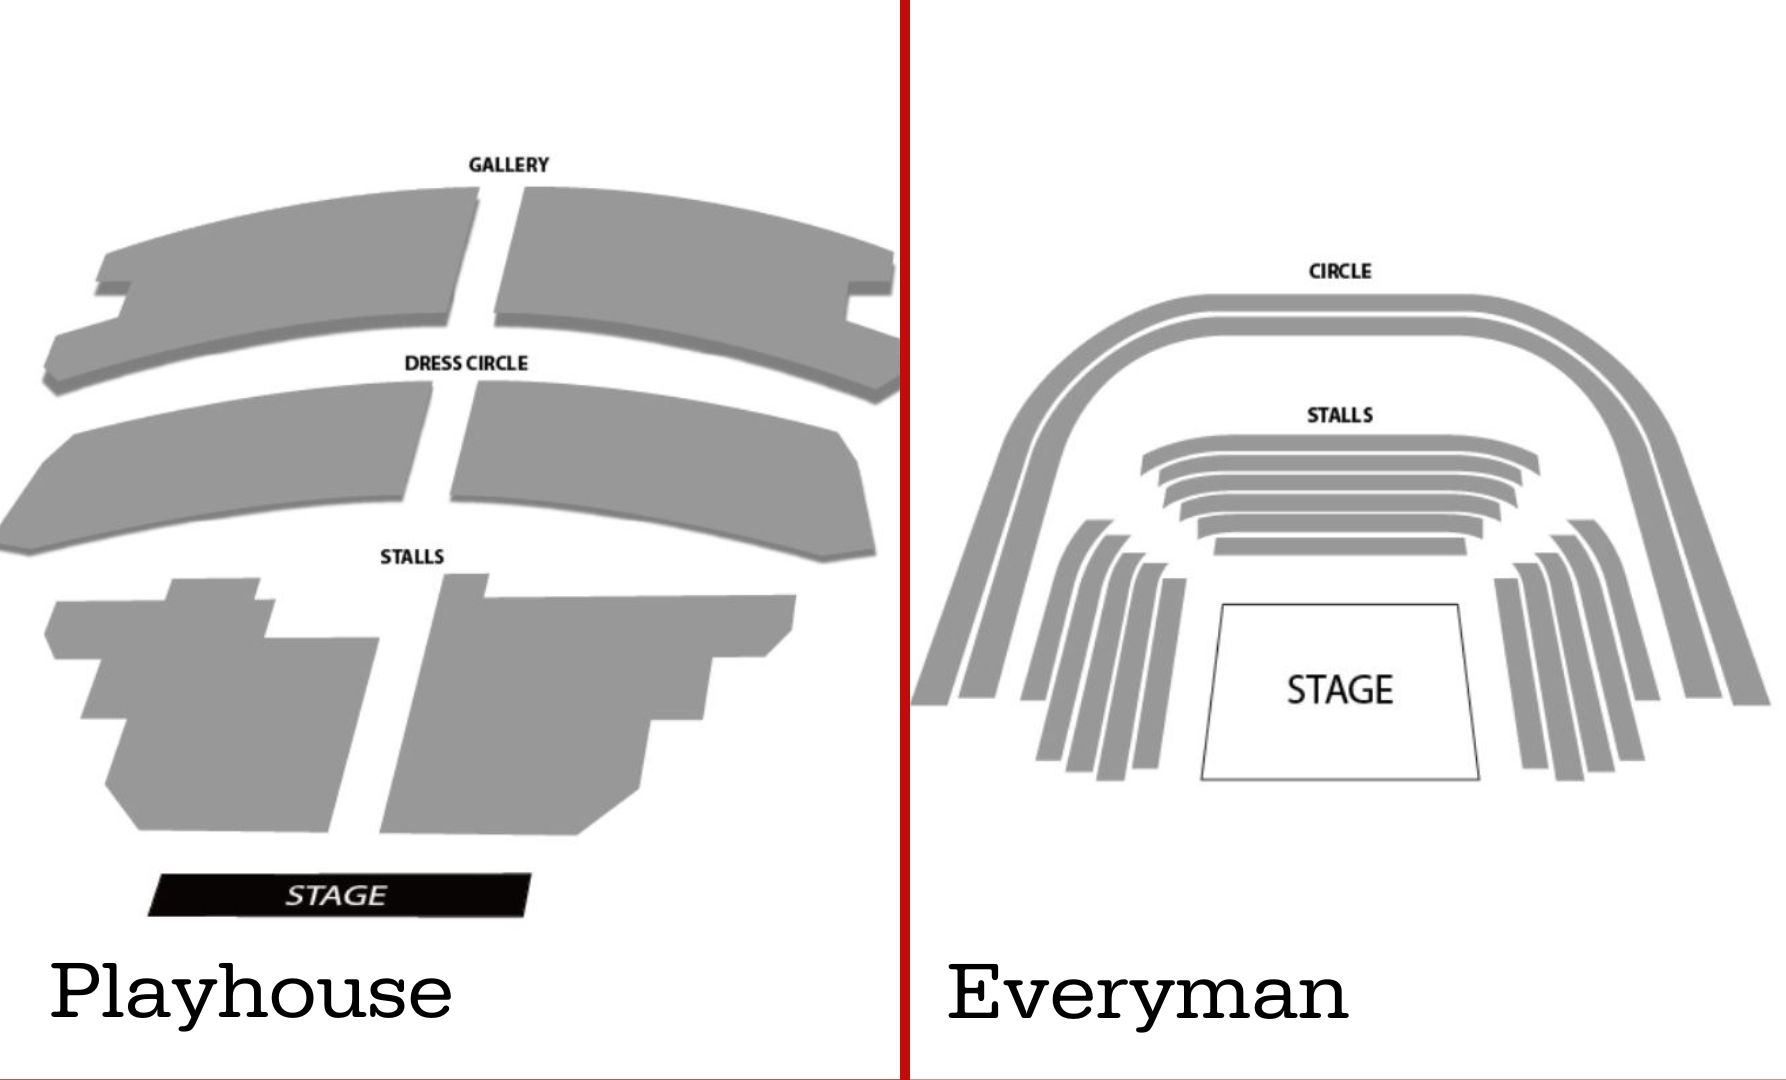 Playhouse and Everyman seating plan